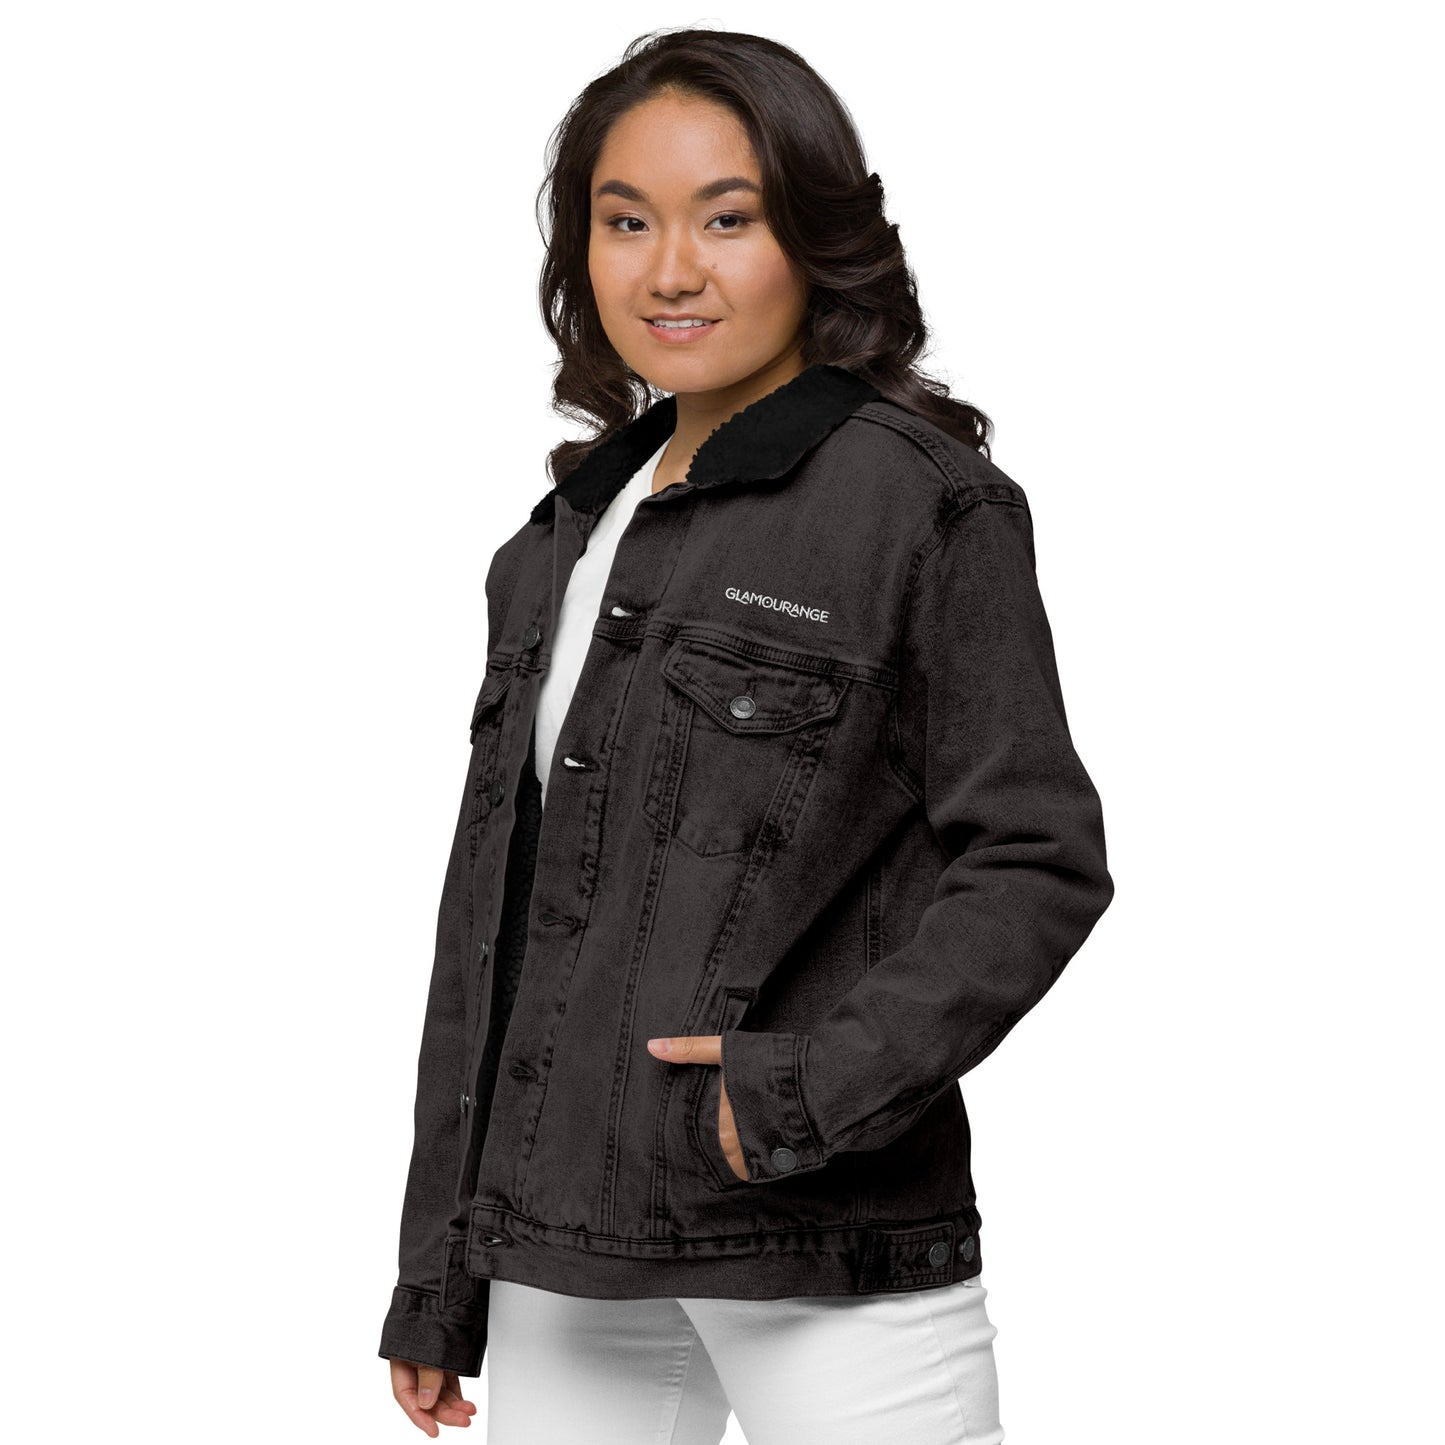 Denim Light & Denim Jacket Black For Women (Glamourange Sherpa Denim Jackets Womens)